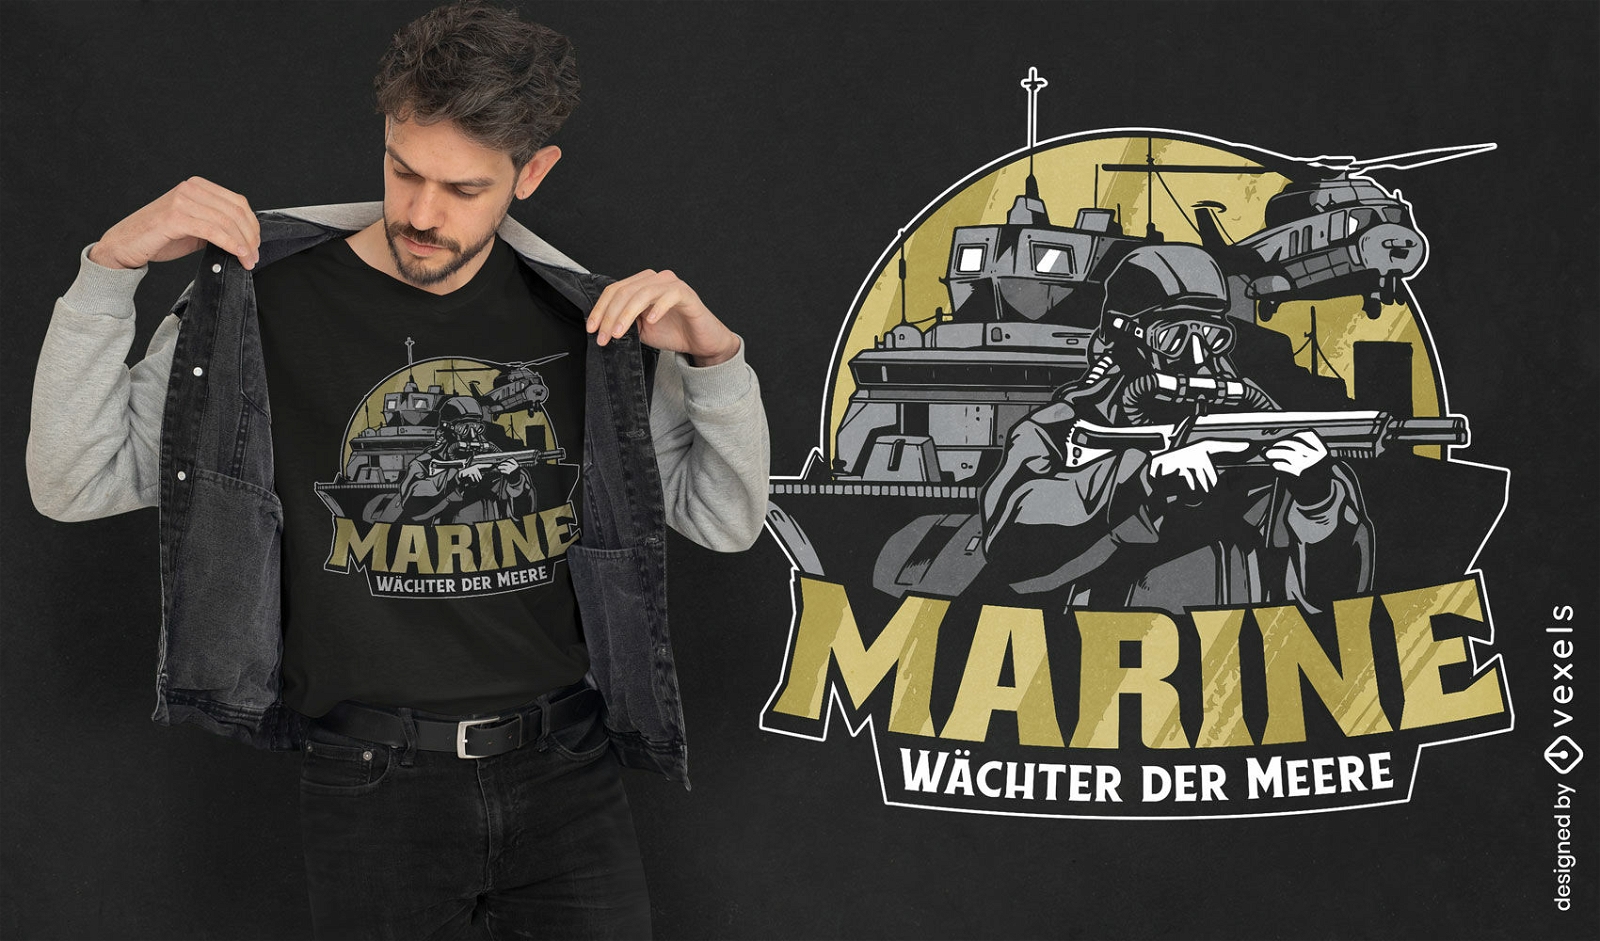 Dise?o de camiseta militar marina alemana.